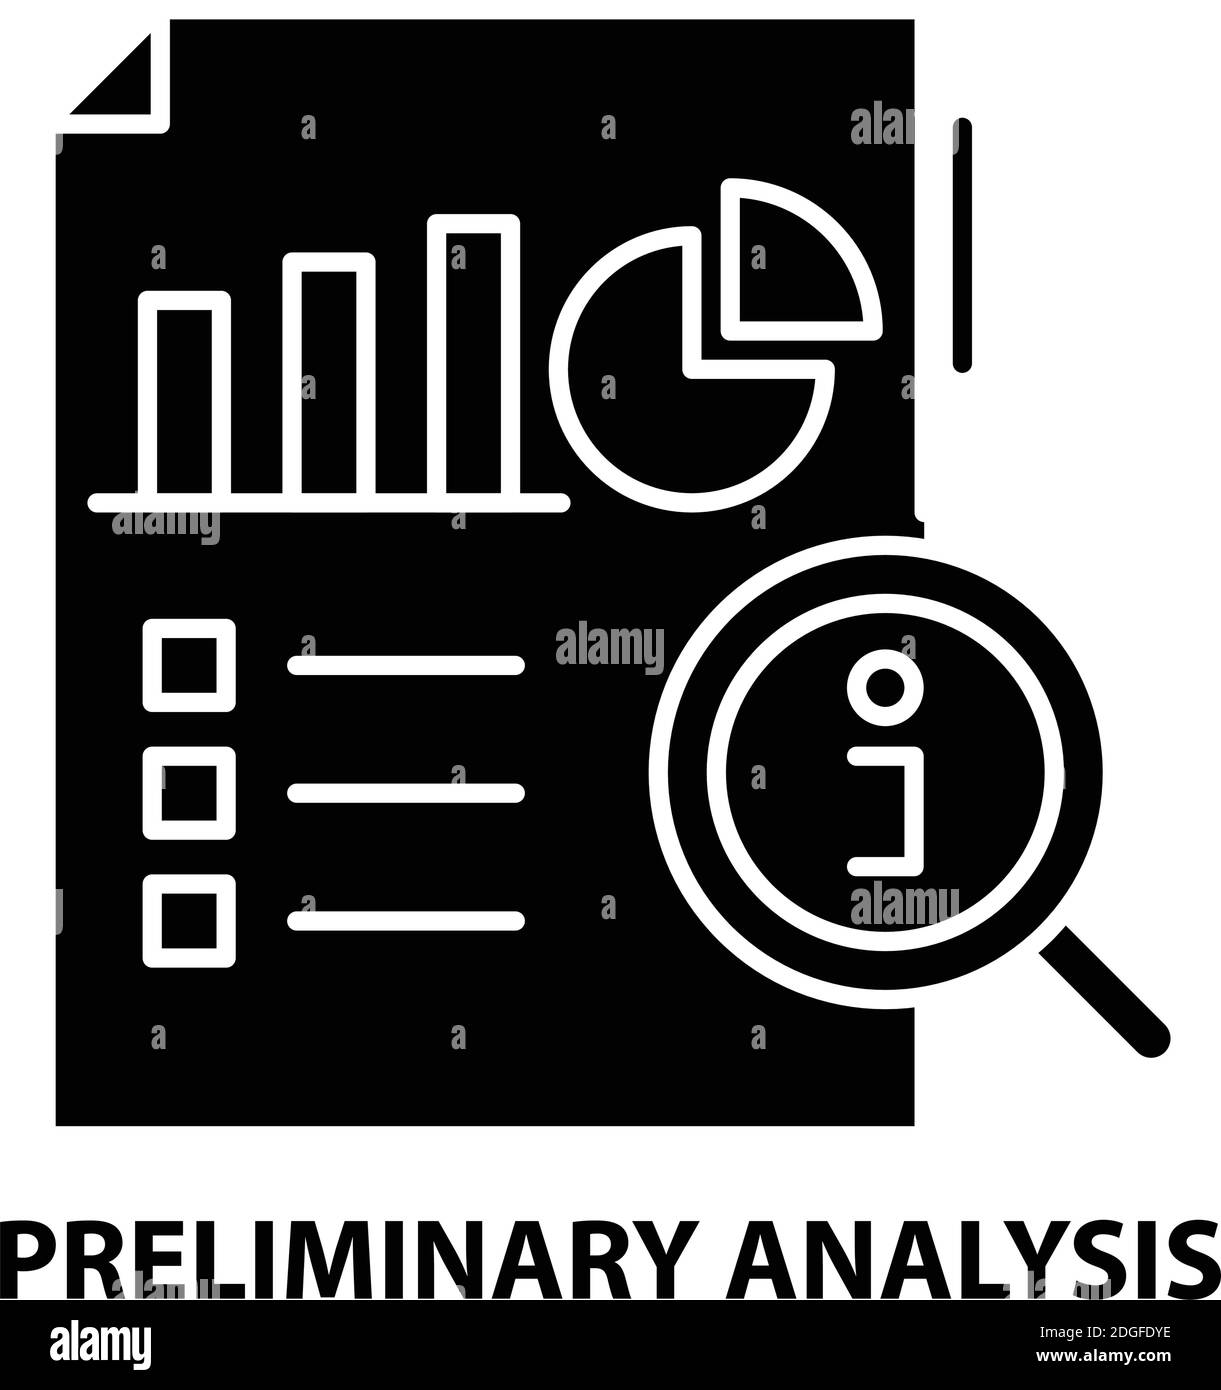 preliminary analysis icon, black vector sign with editable strokes, concept illustration Stock Vector